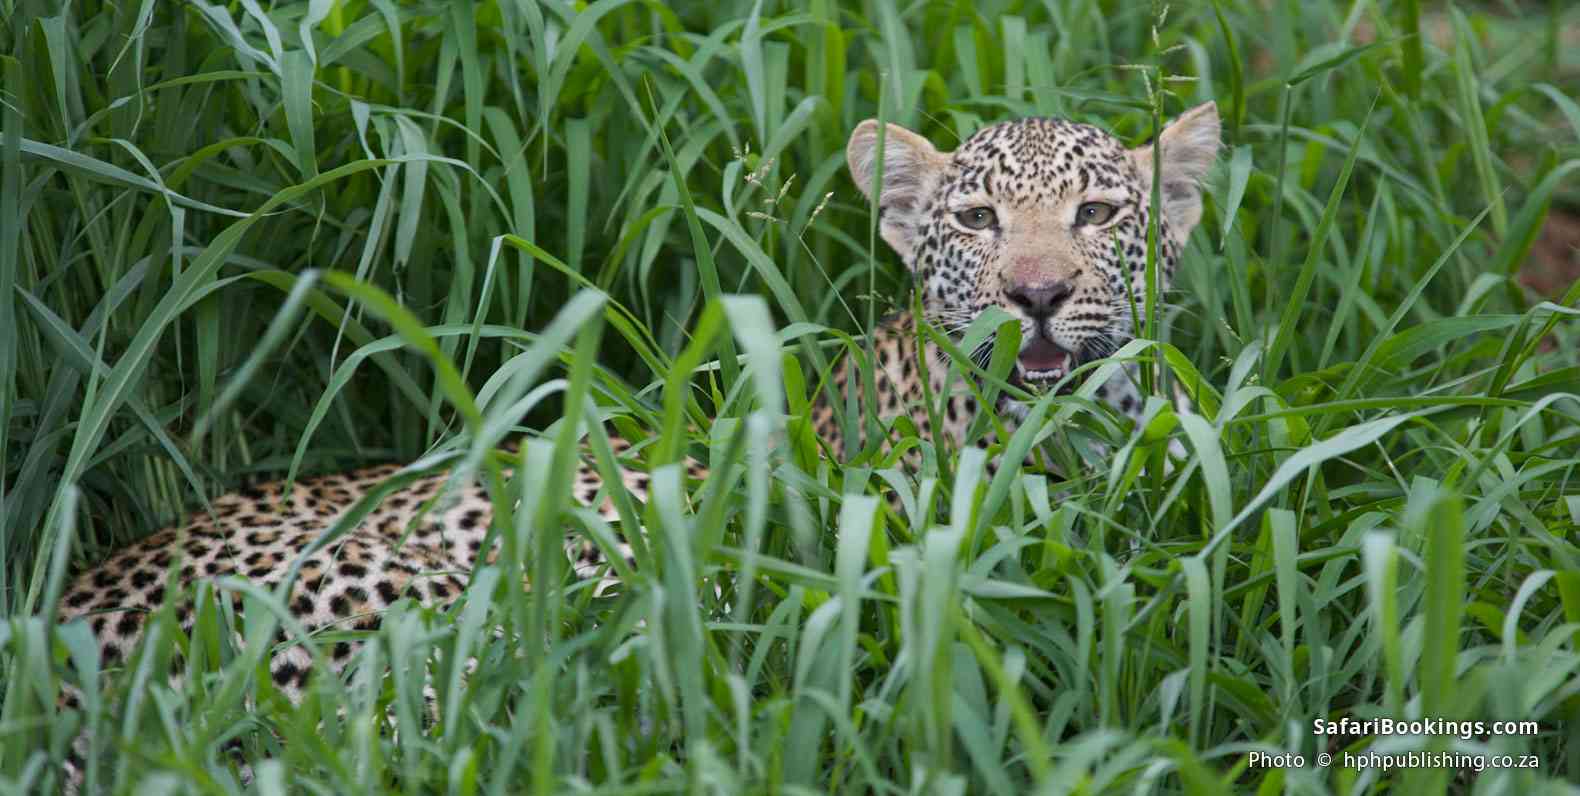 Juvenile leopard resting